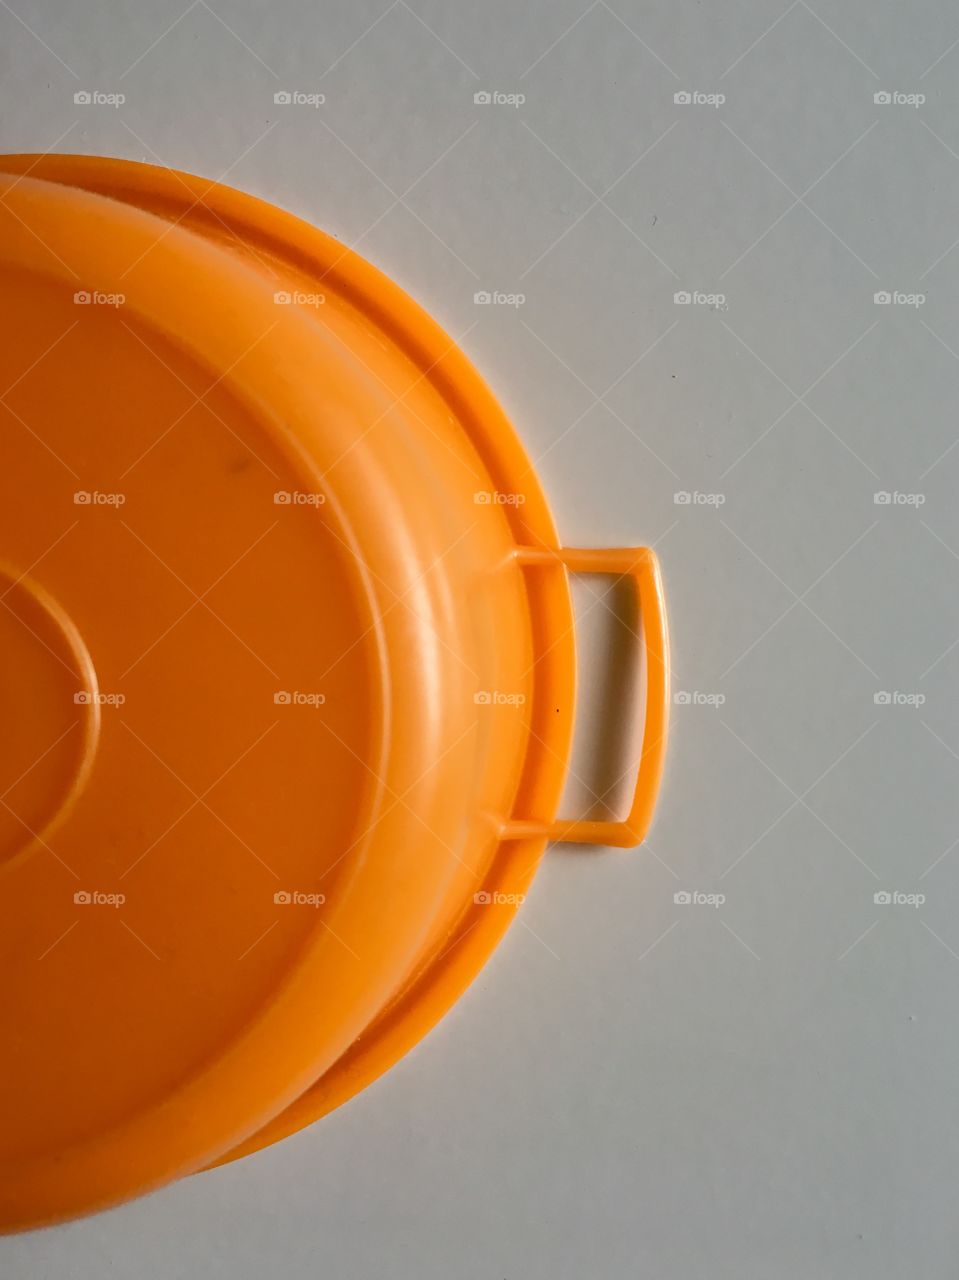 Orange container on grey background